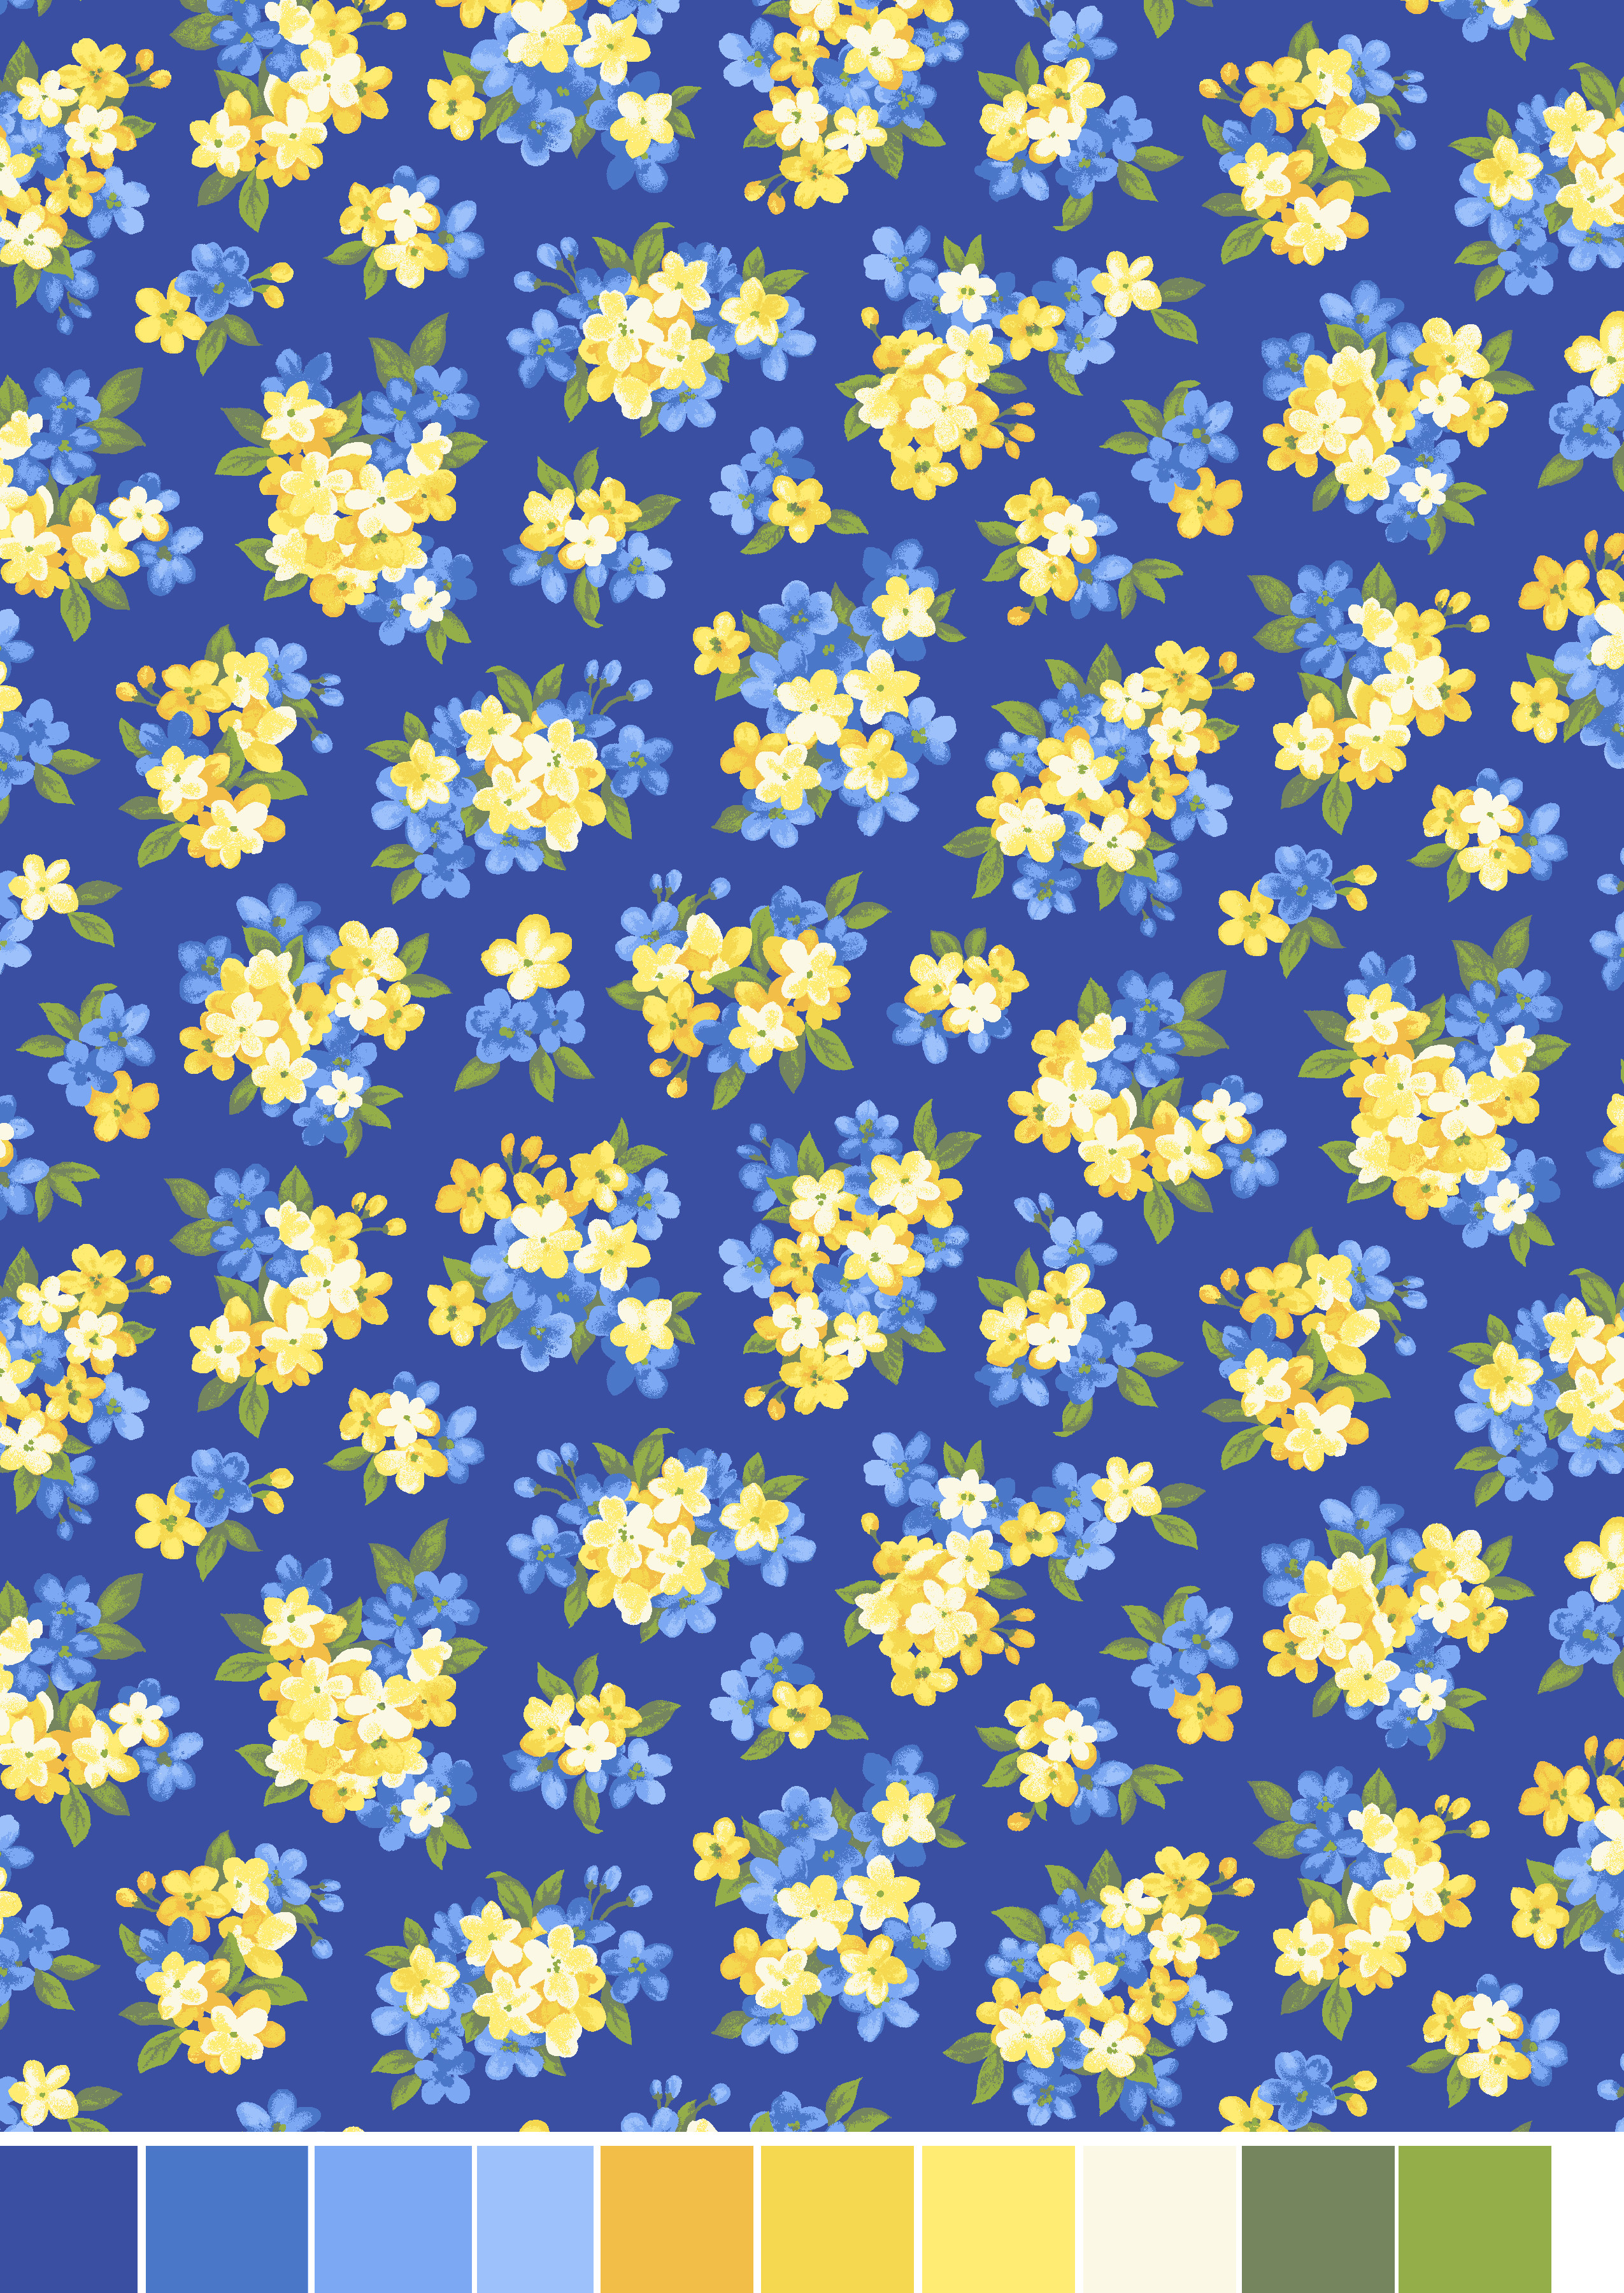 RTC Fabrics 100% Cotton 44" x 1 Yard Small Floral Blue Print Pre-Cut Fabric, 1 Each - image 3 of 3